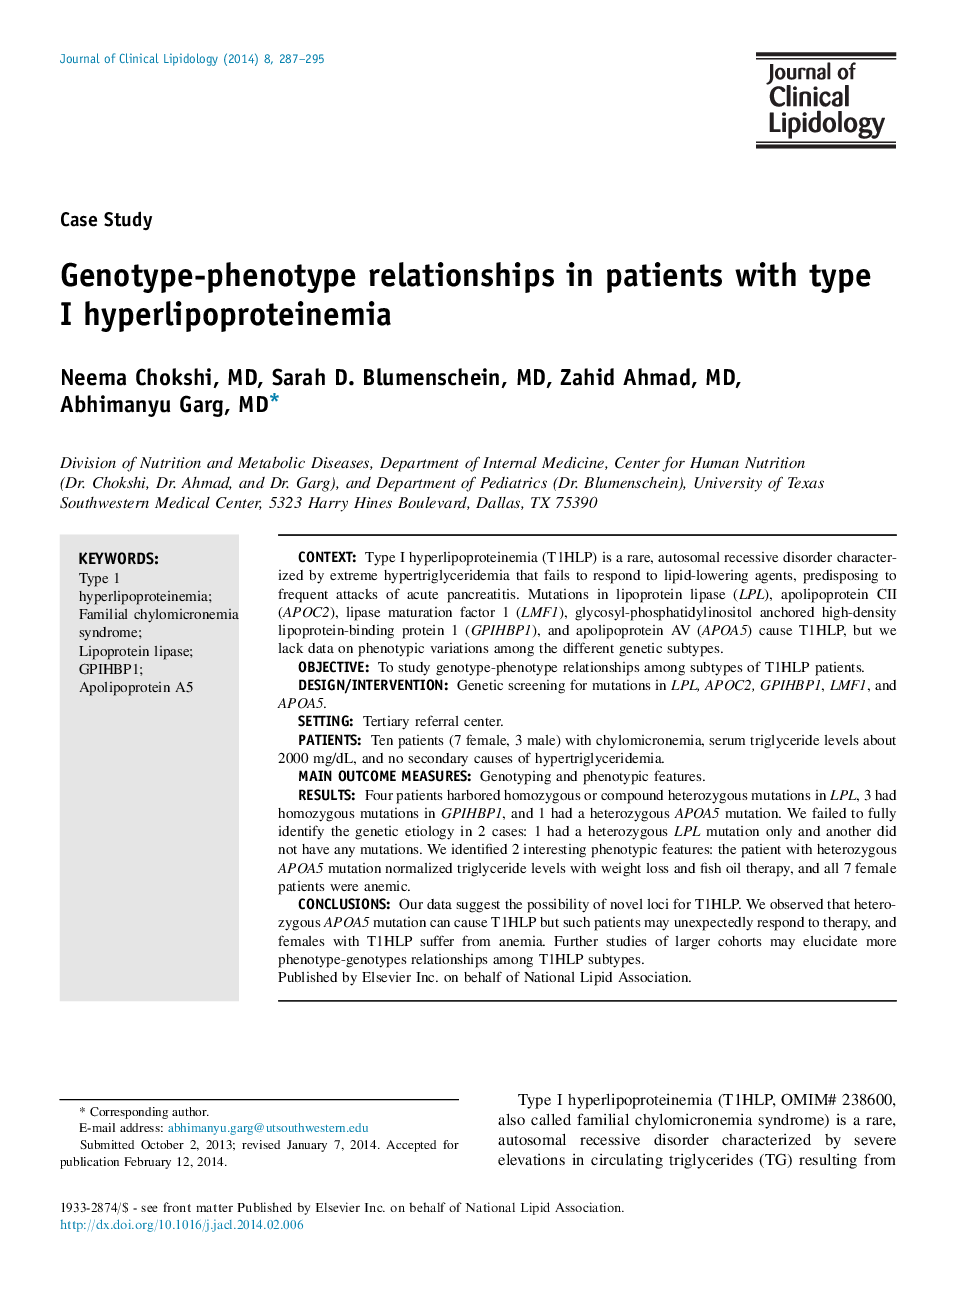 Genotype-phenotype relationships in patients with type I hyperlipoproteinemia